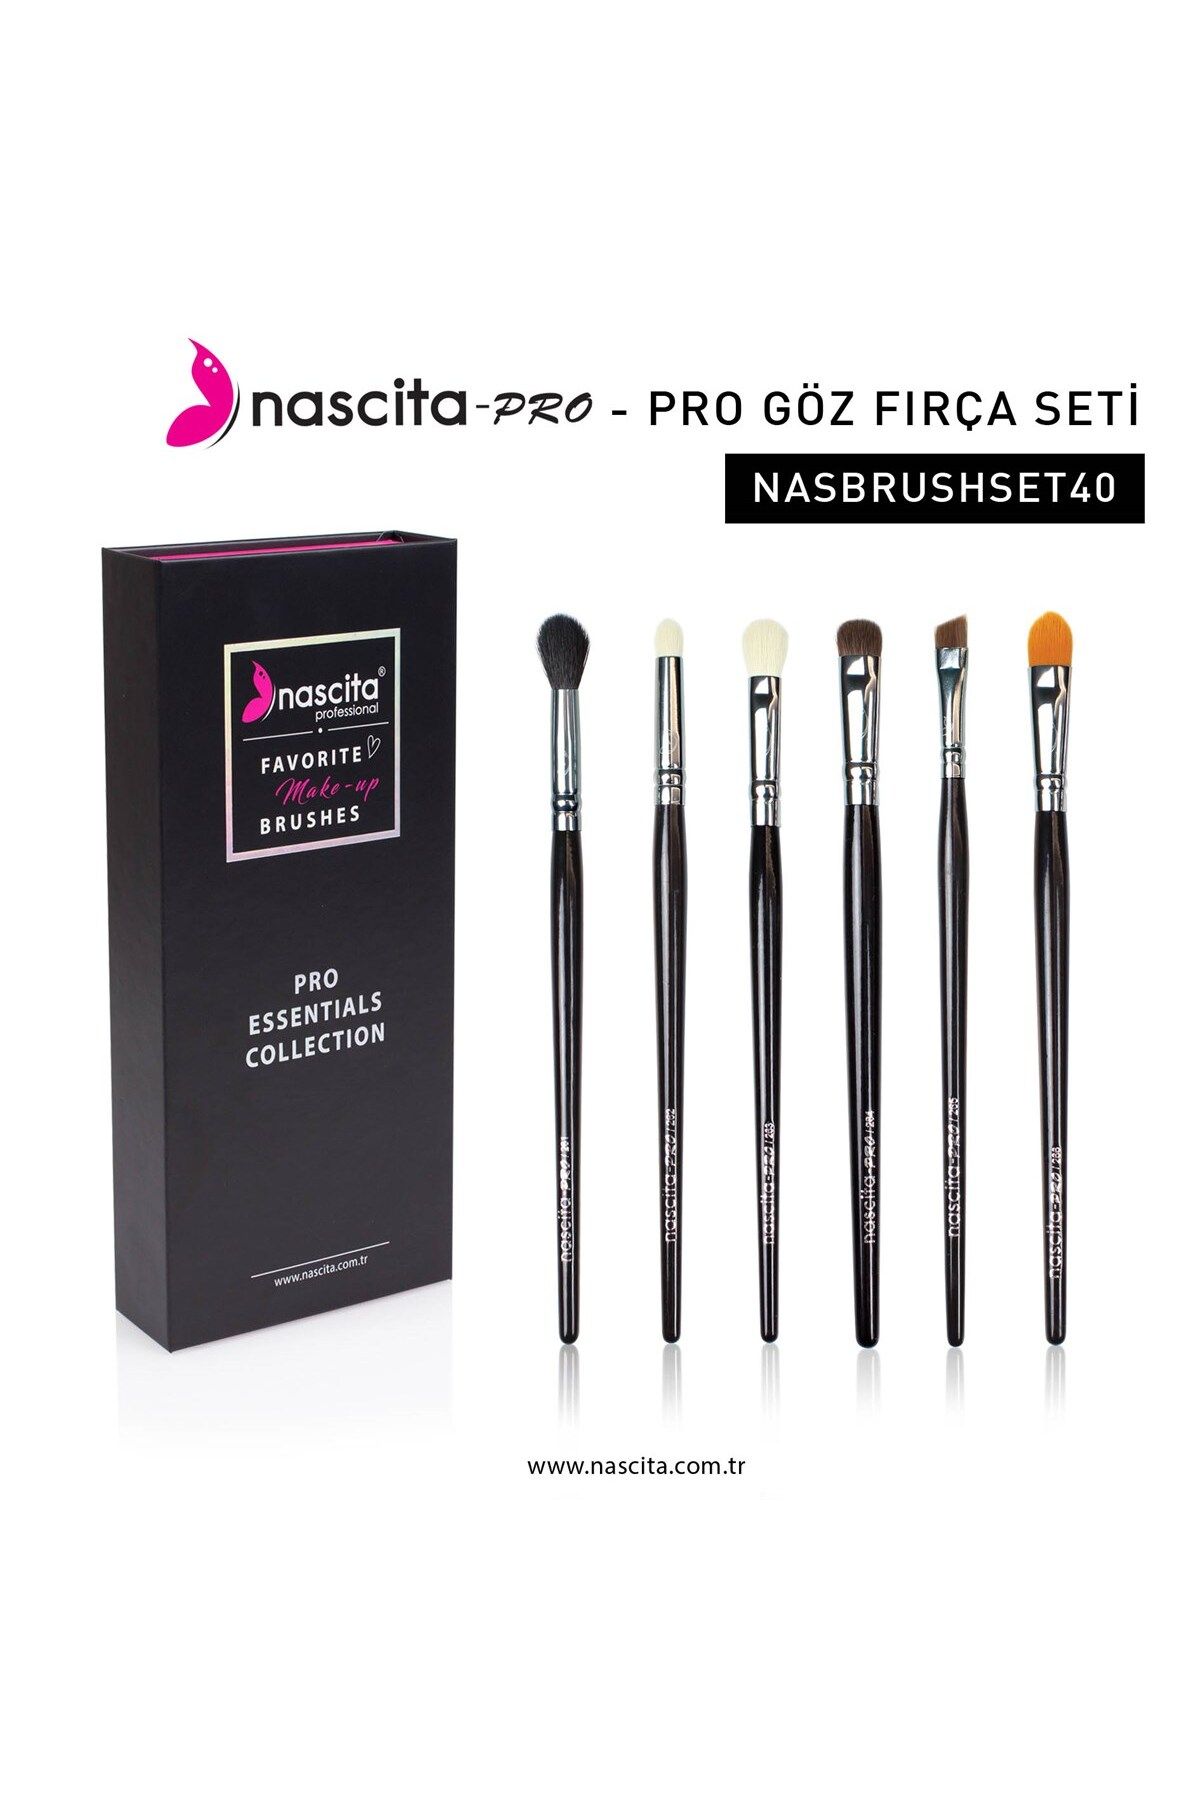 Nascita Pro Göz Makyaj Fırça Seti Nasbrushset40